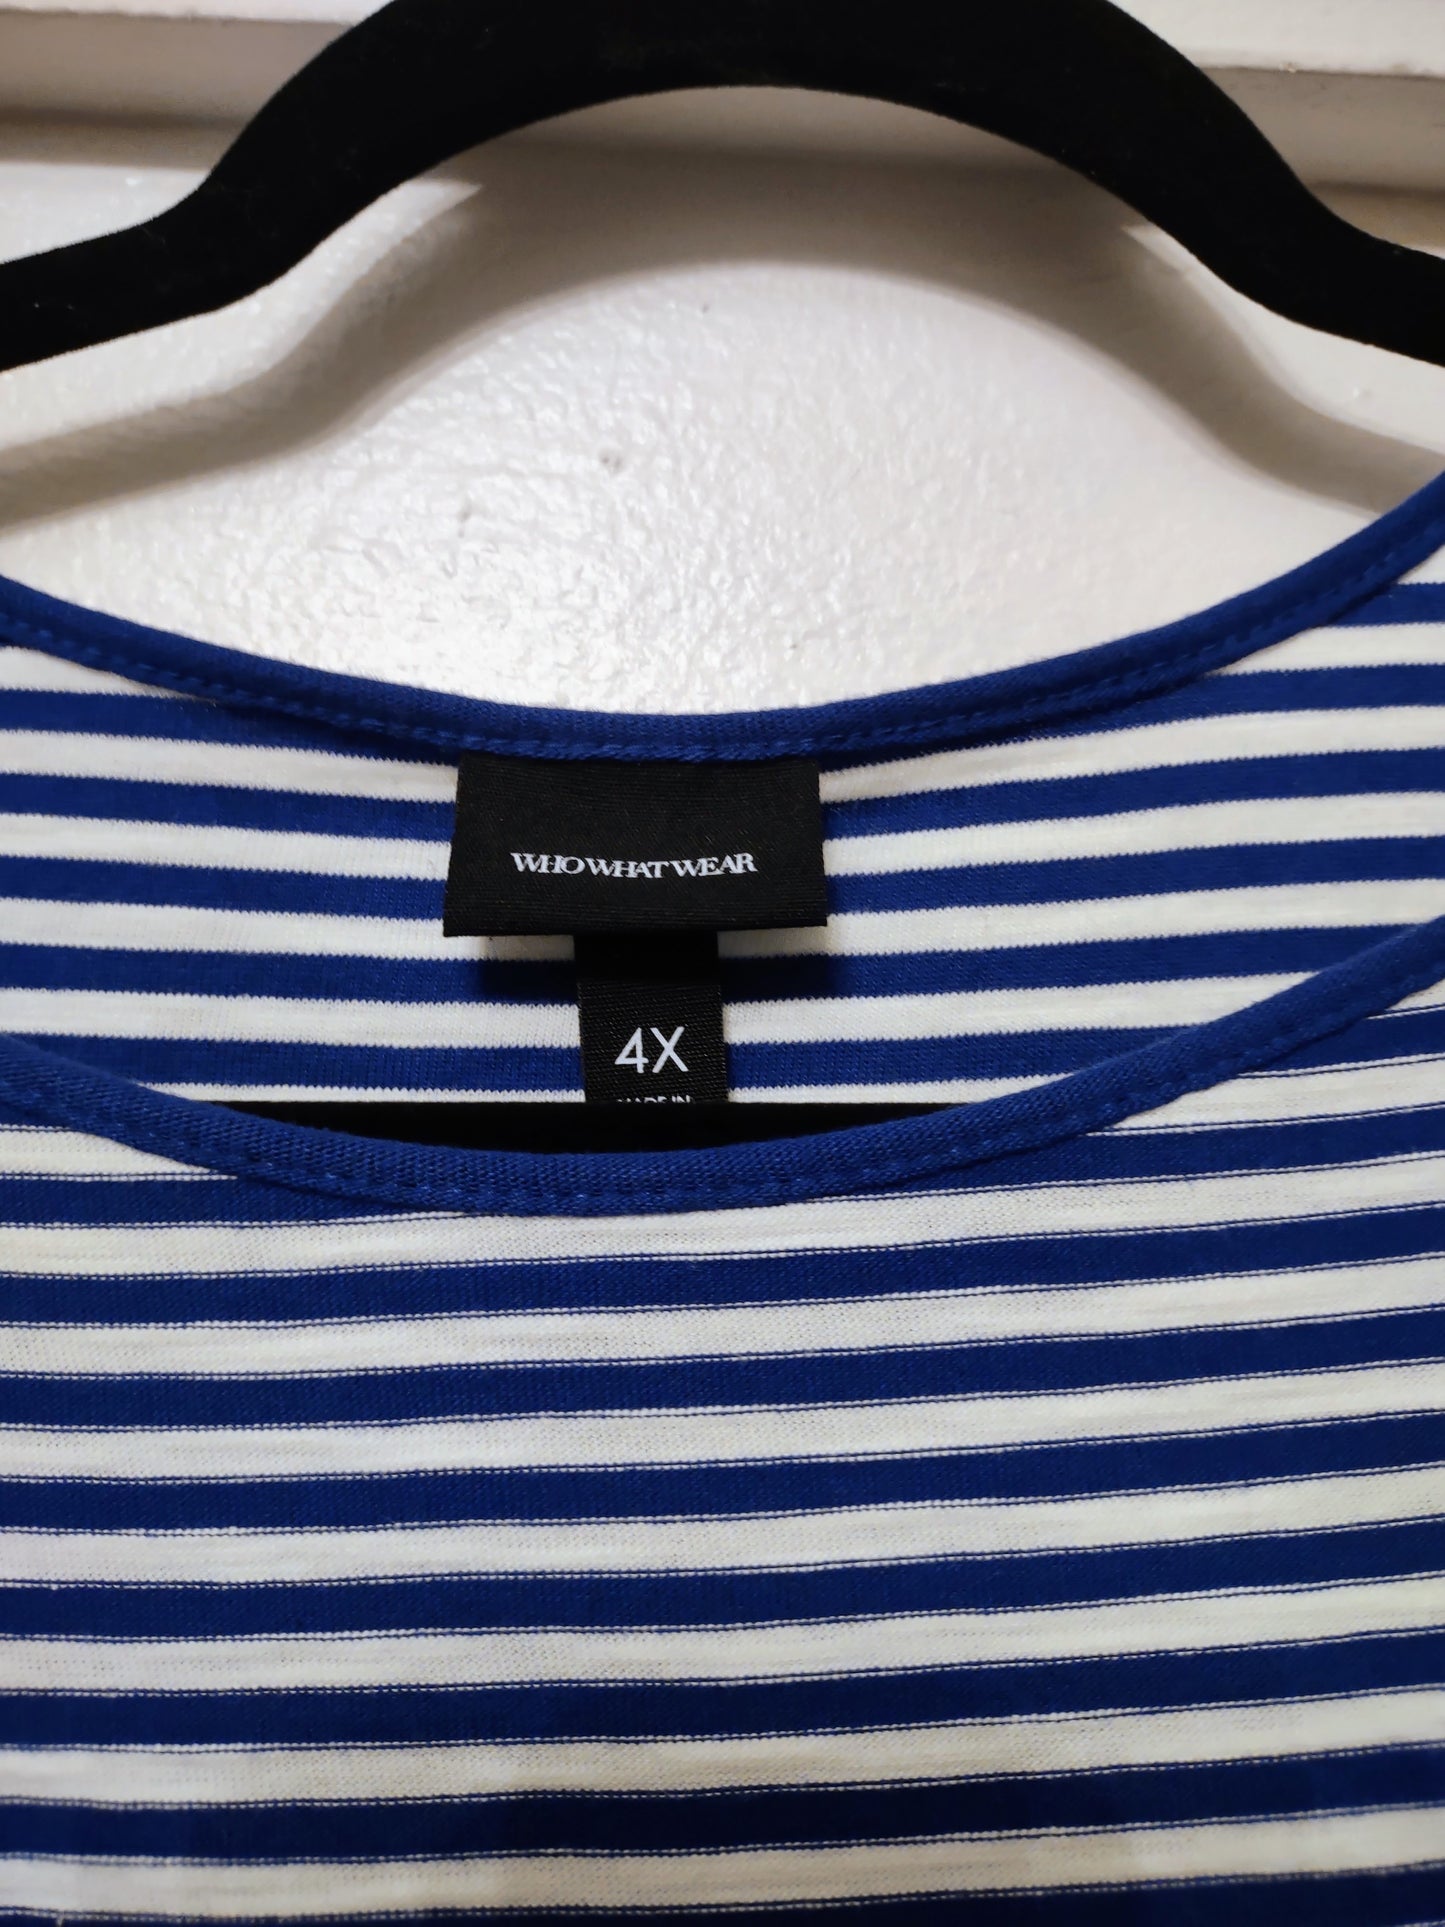 Blue & White Striped shirt 4X